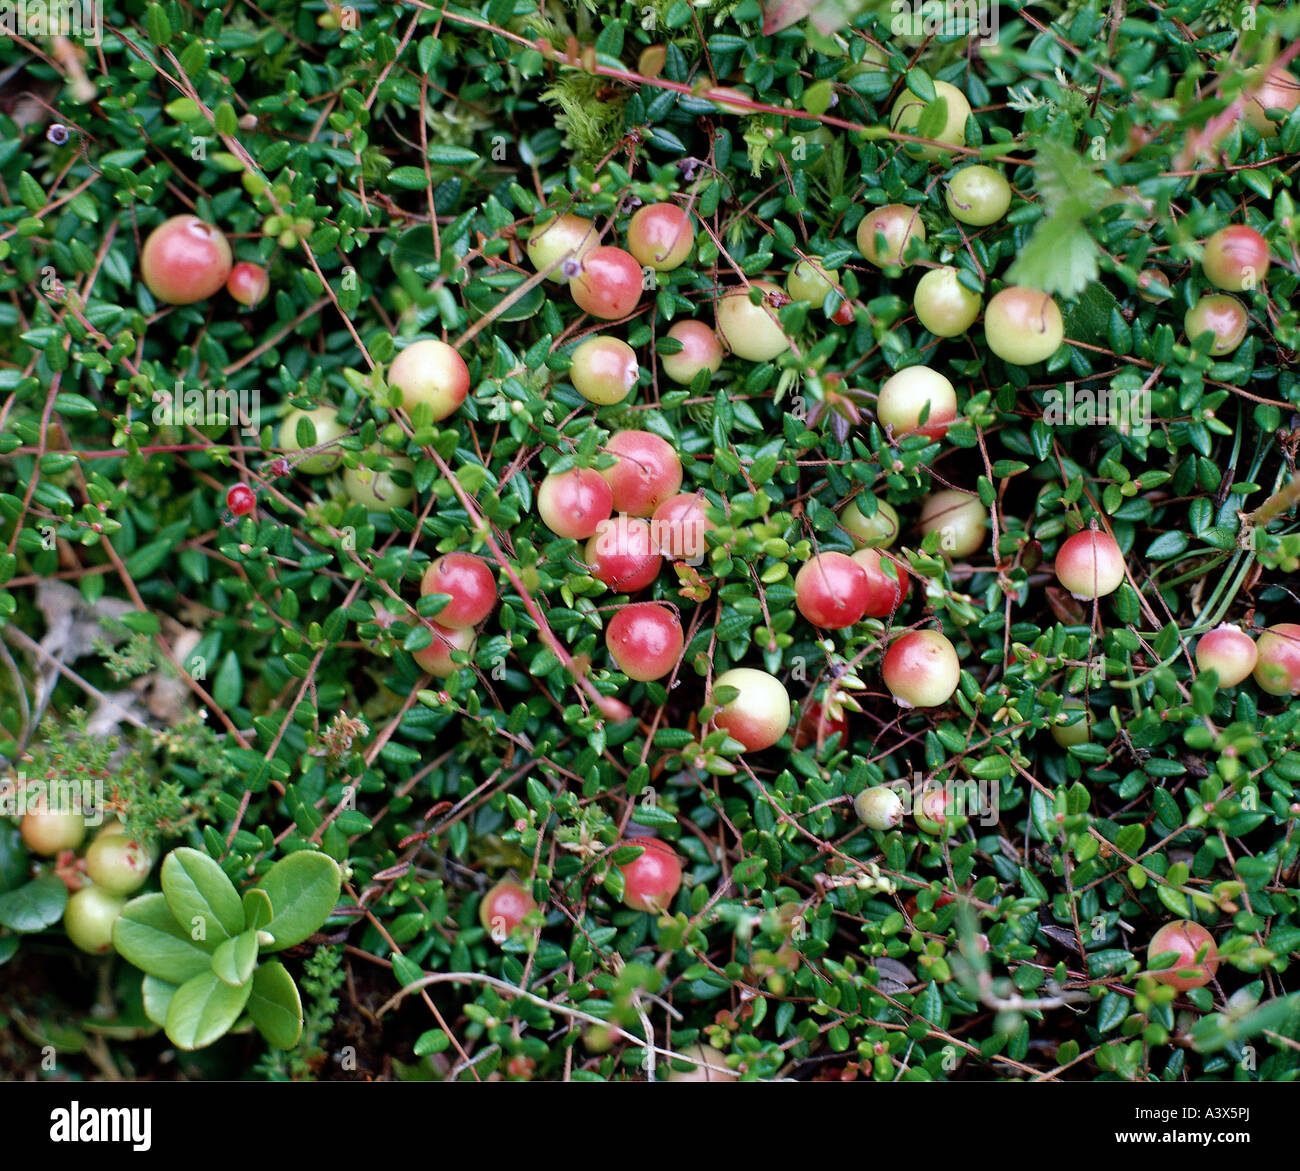 botany, Vaccinium, Cranberry, (Vaccinium oxycoccus), American Cranberry, (Vaccinium oxycoccus macrocarpon), berries, at shrub, C Stock Photo